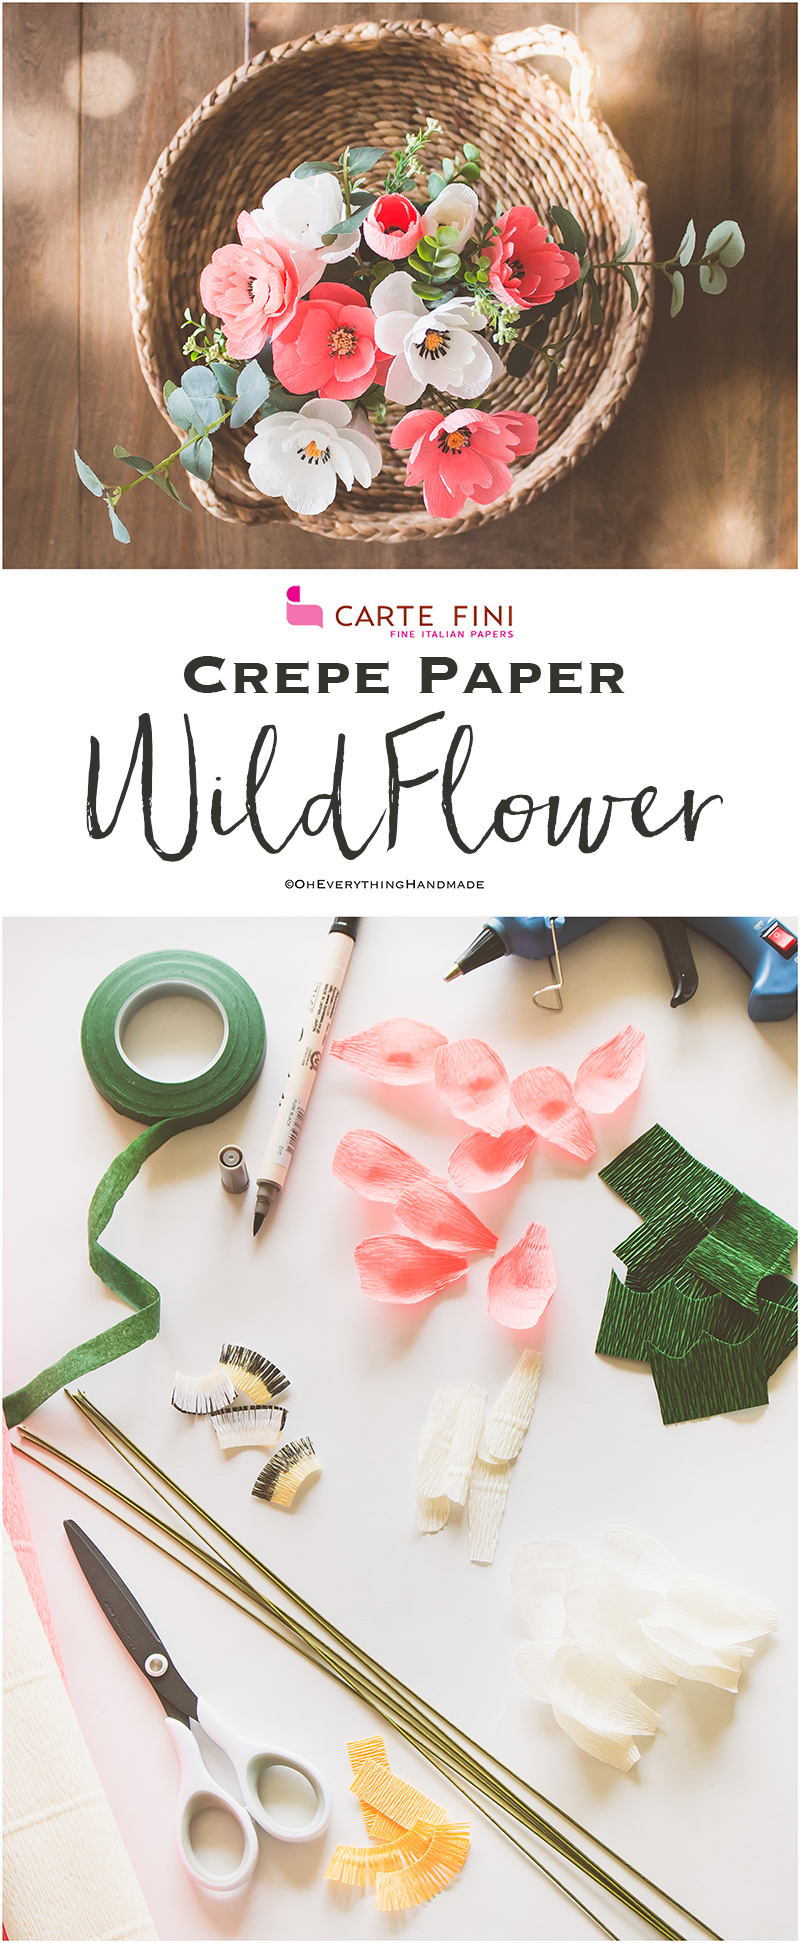 Crepe Paper Wildflower DIY Flower crafts ideas